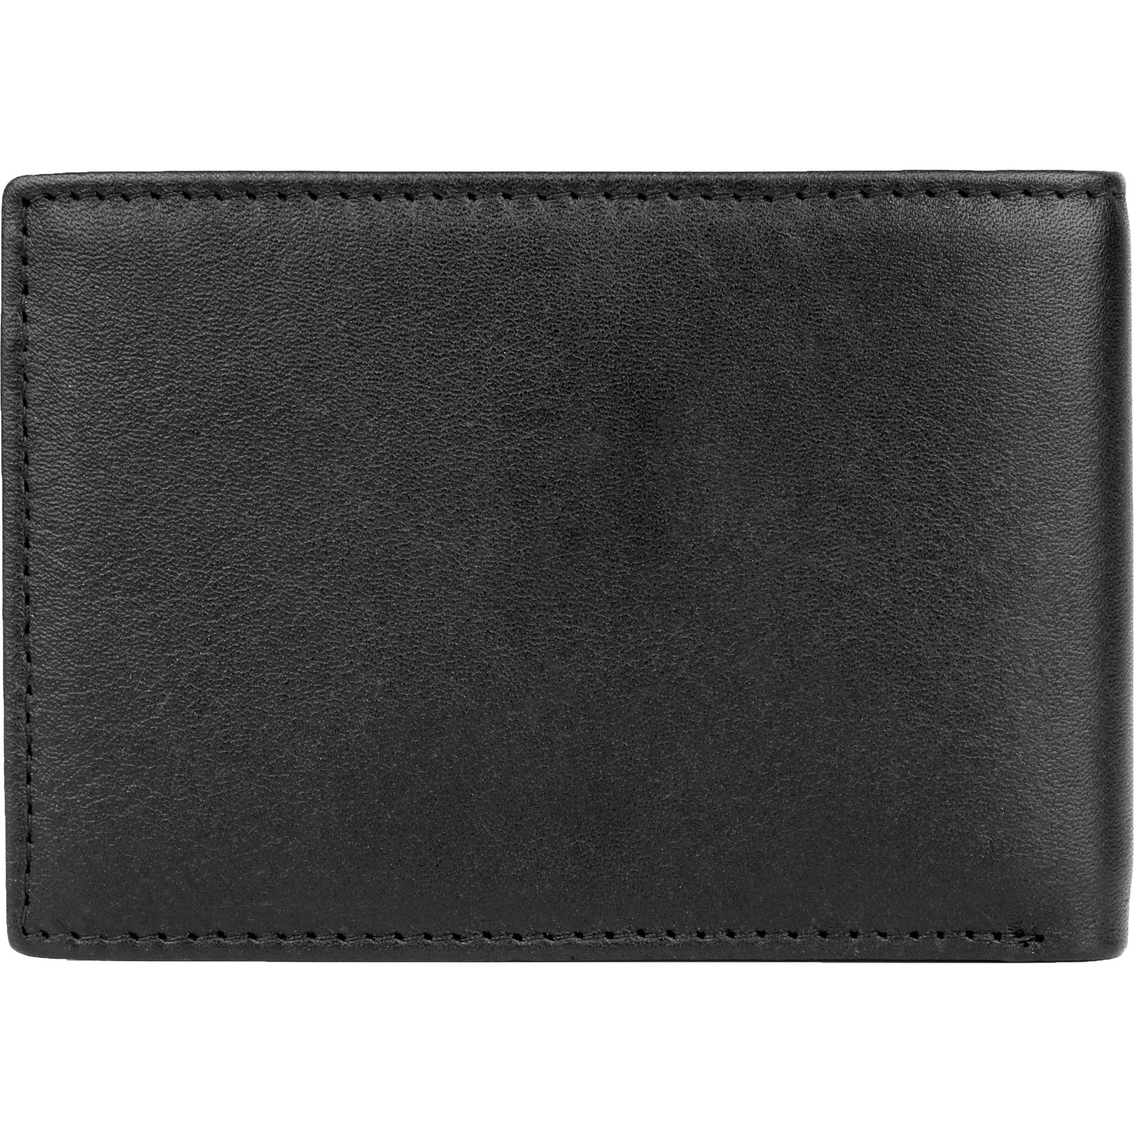 Buxton Houston Rfid Front Pocket Slim Fold Wallet | Wallets | Clothing ...